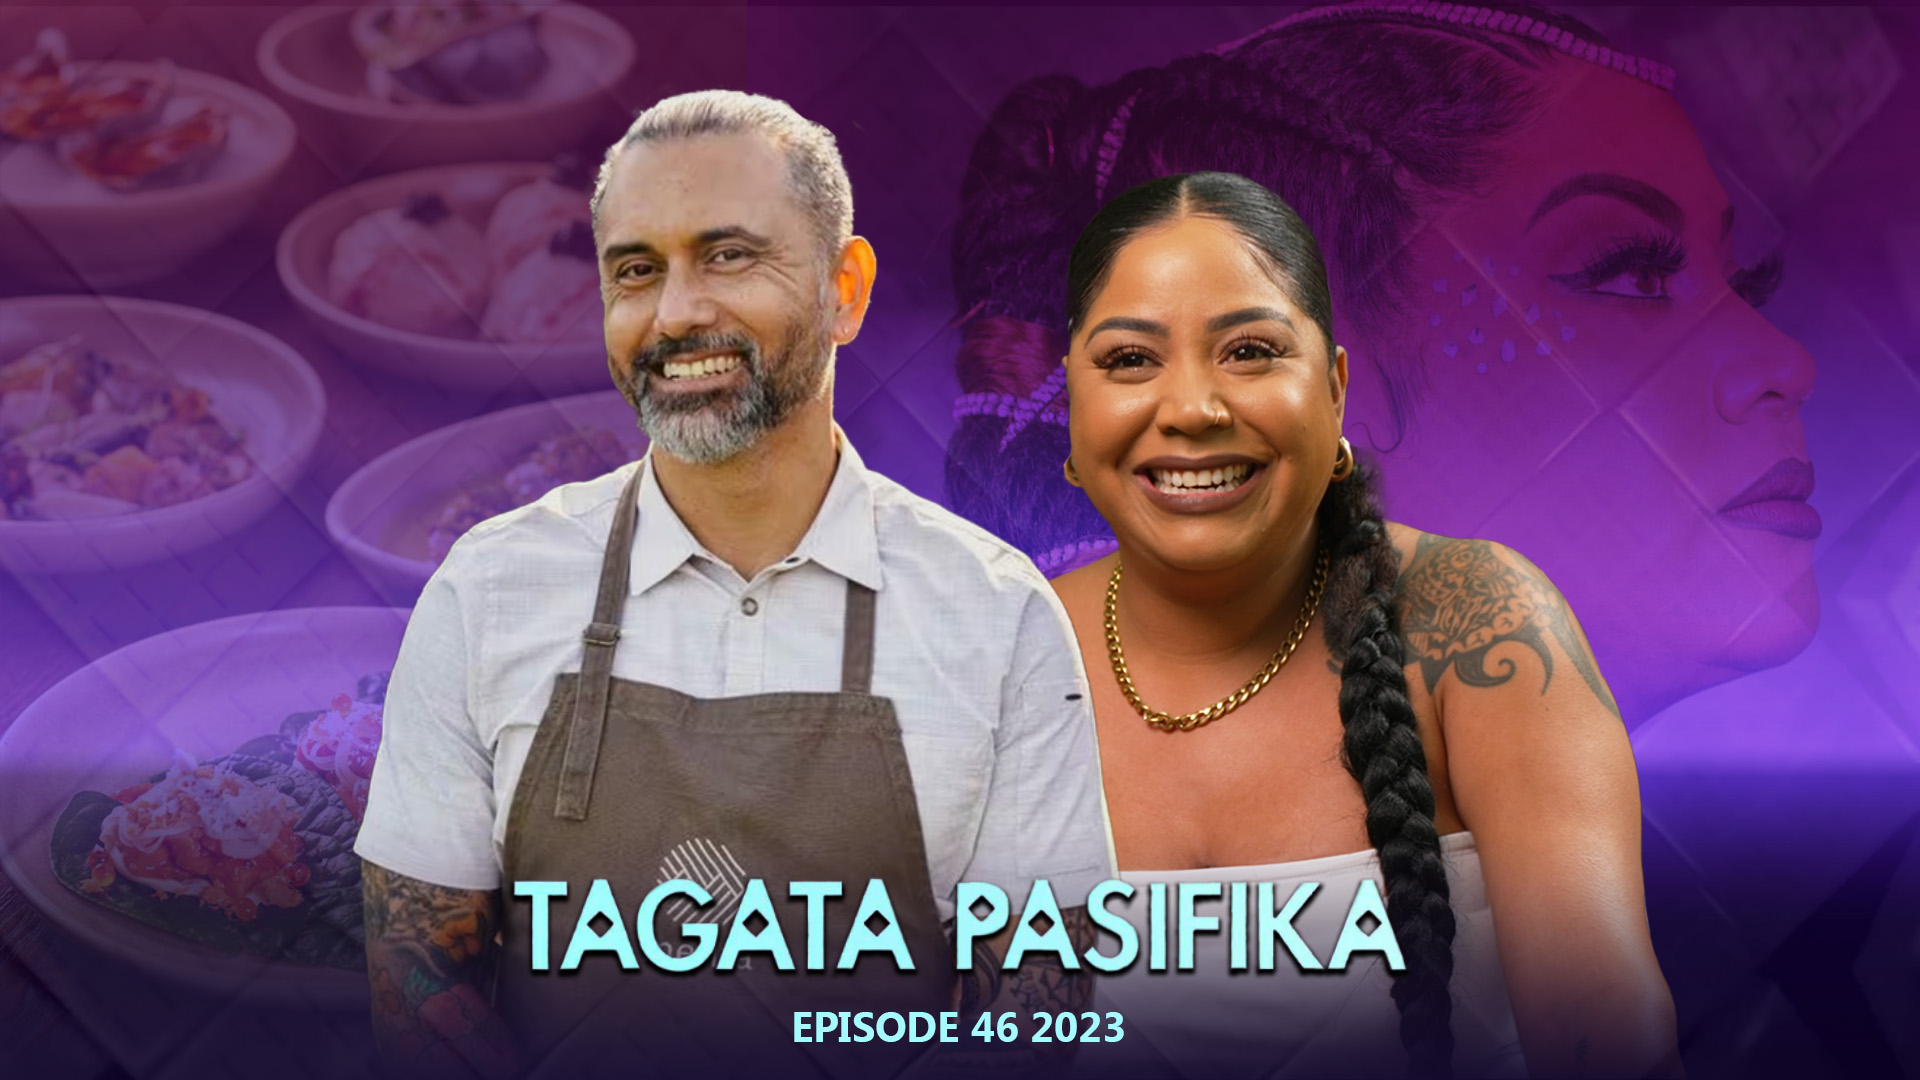 WATCH: Tagata Pasifika 2023 Episode 46